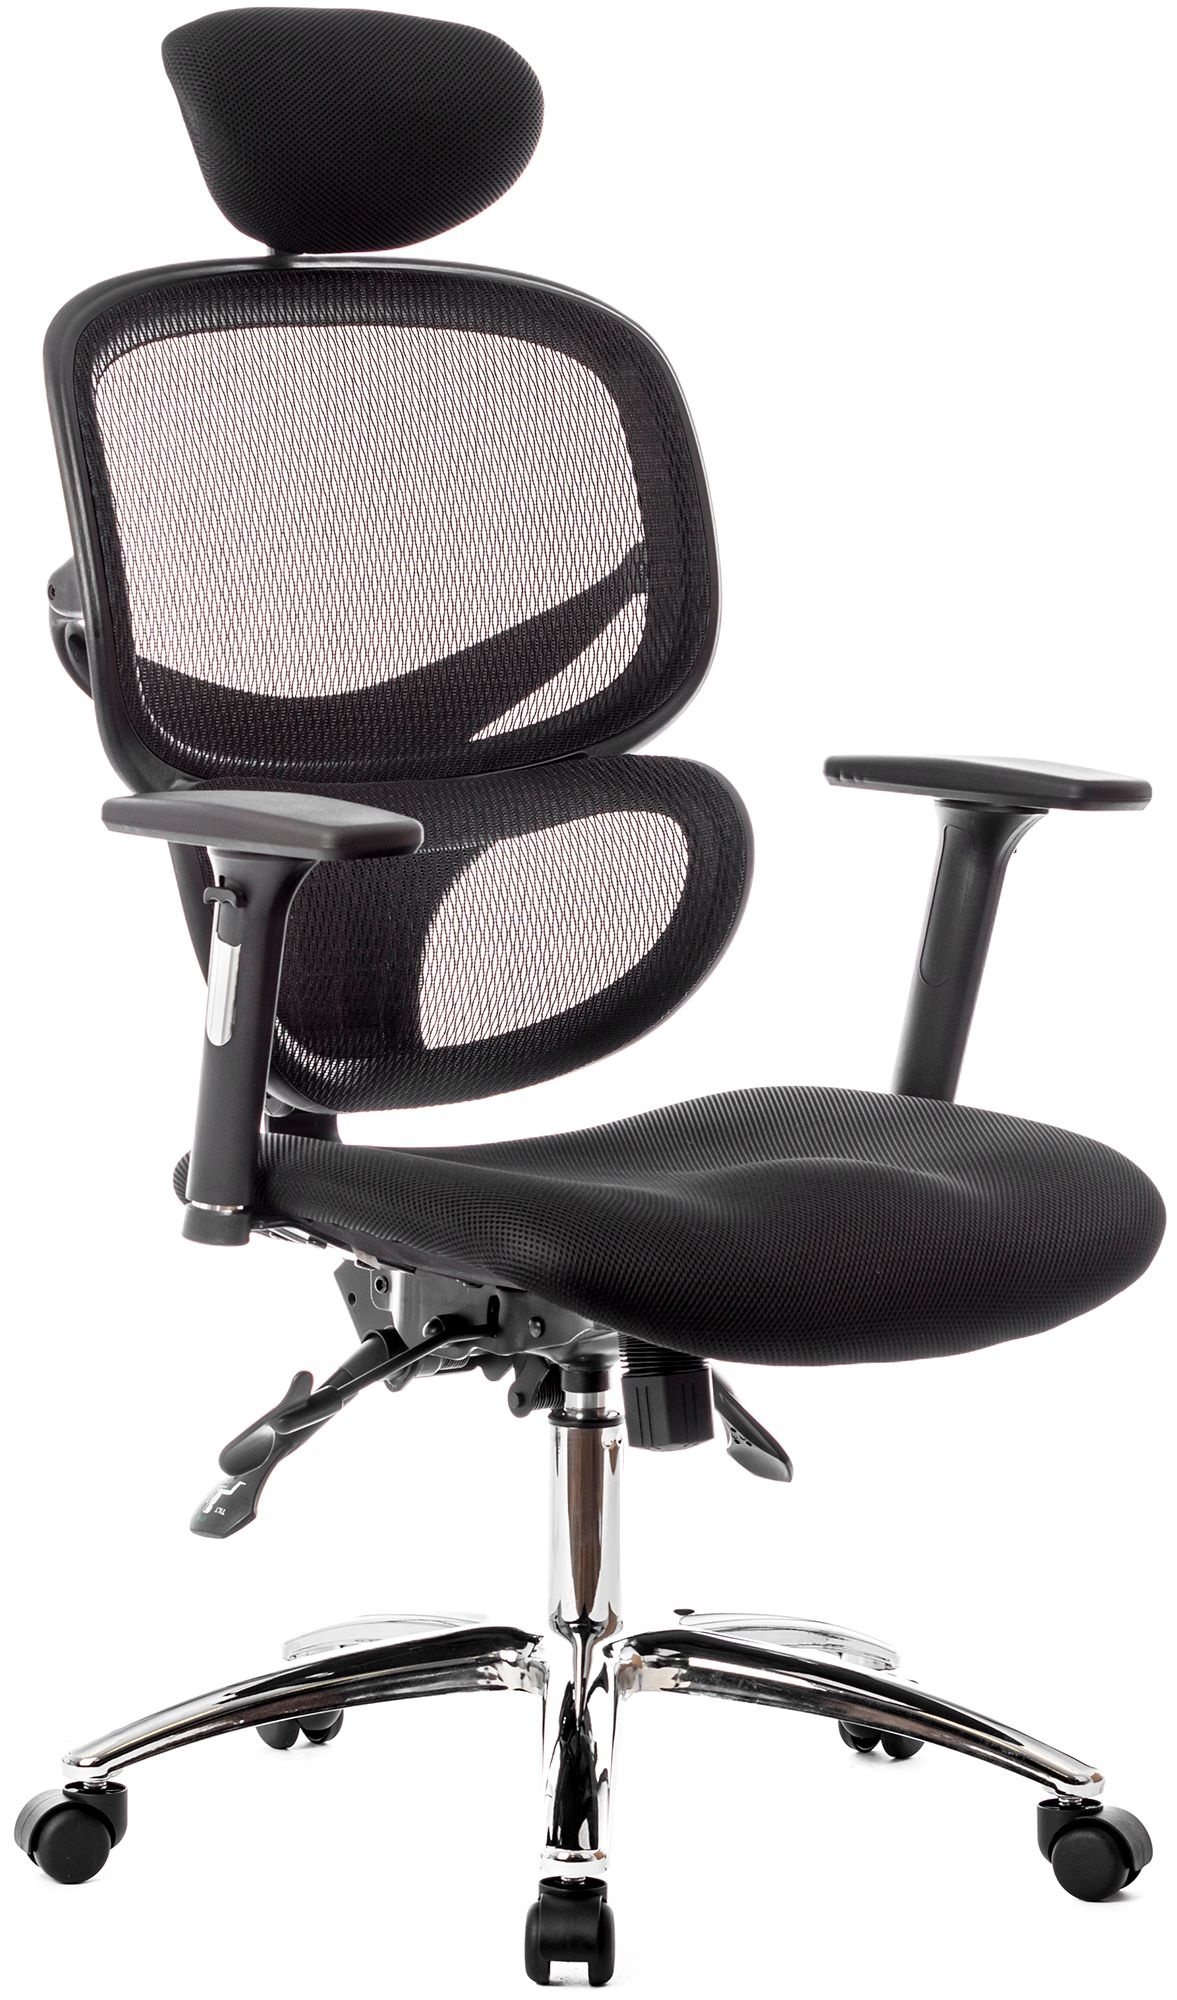 Desire Ergonomic Mesh Office Chair With, Desire 24hr Ergonomic Mesh Office Chair With Headrest